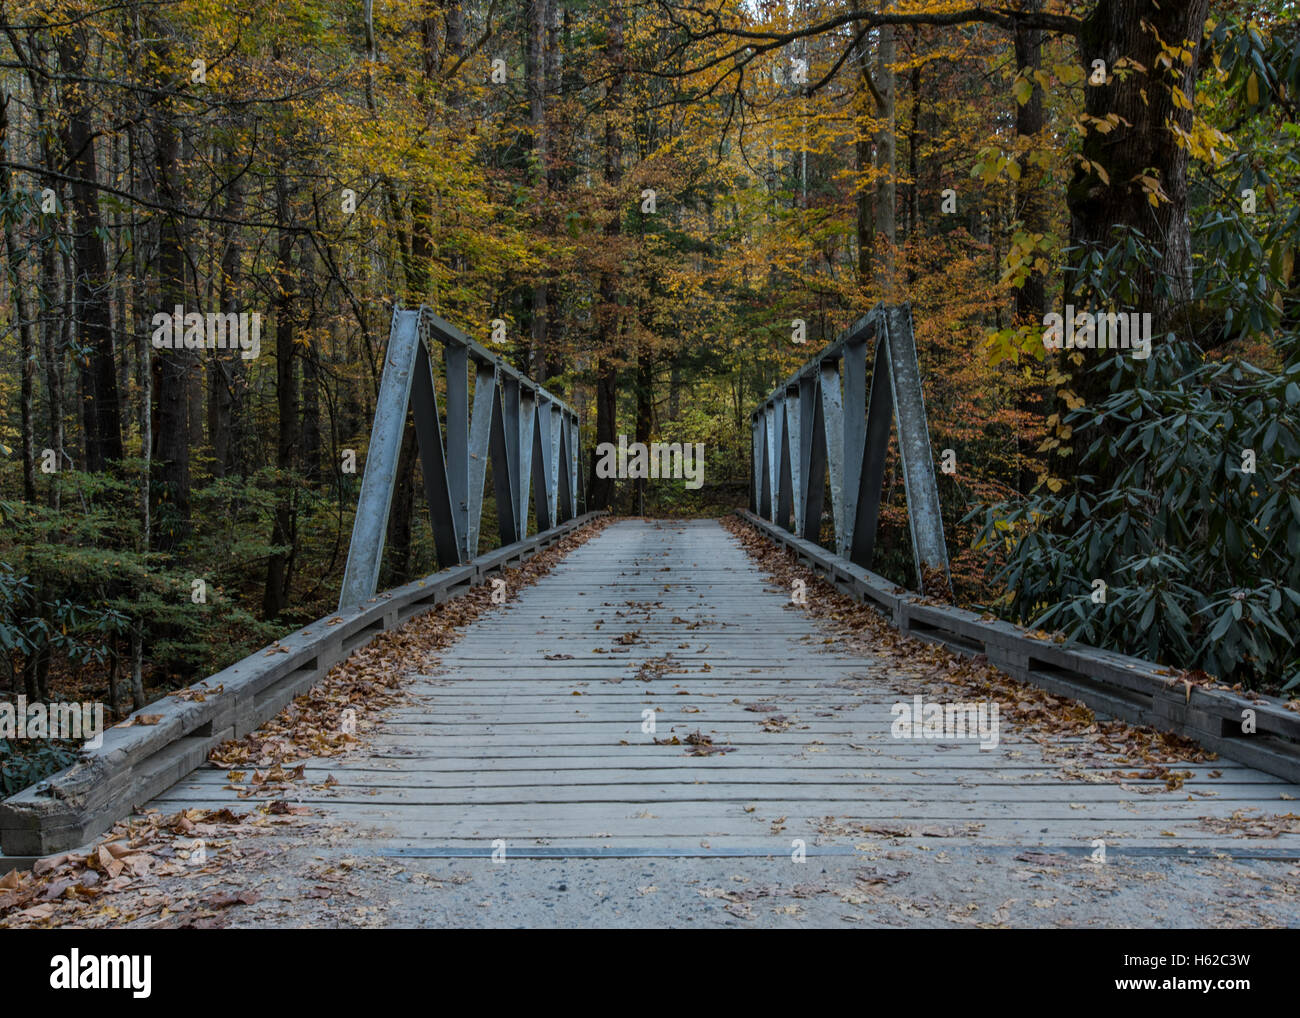 Entering One Lane Bridge into autum forest Stock Photo